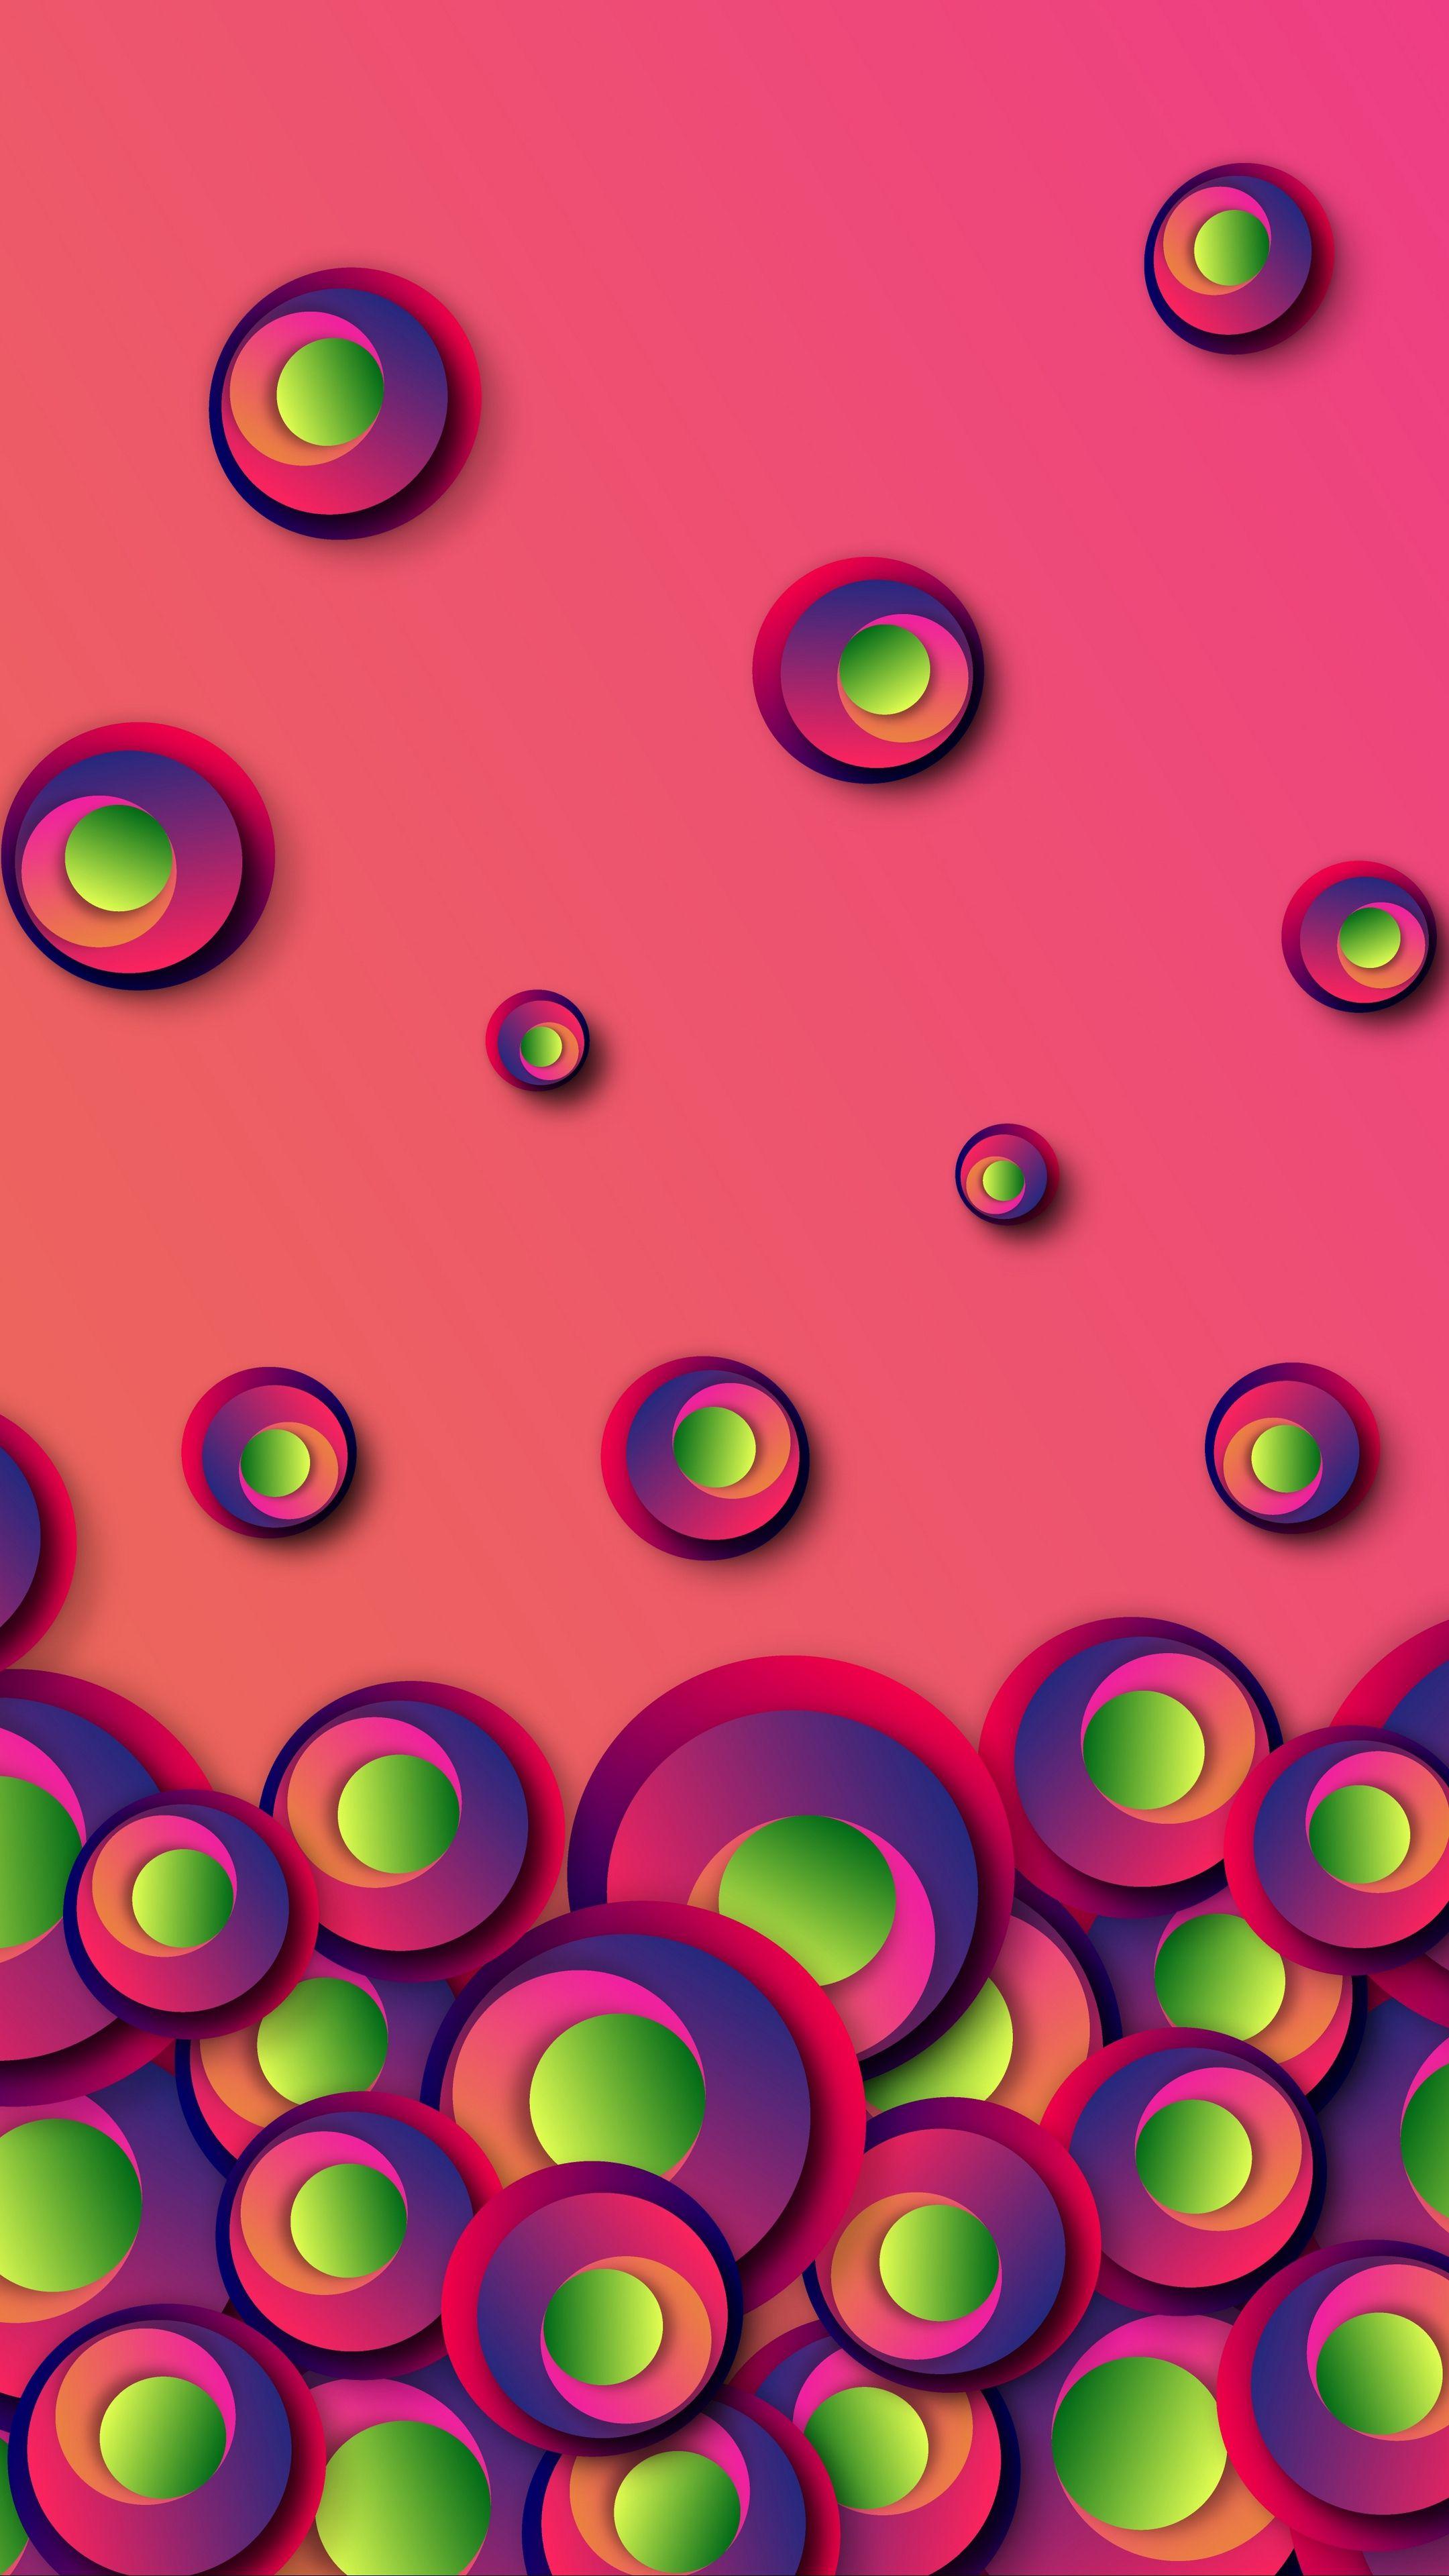 Textures #circles #patterns #pink #wallpaper HD 4k background